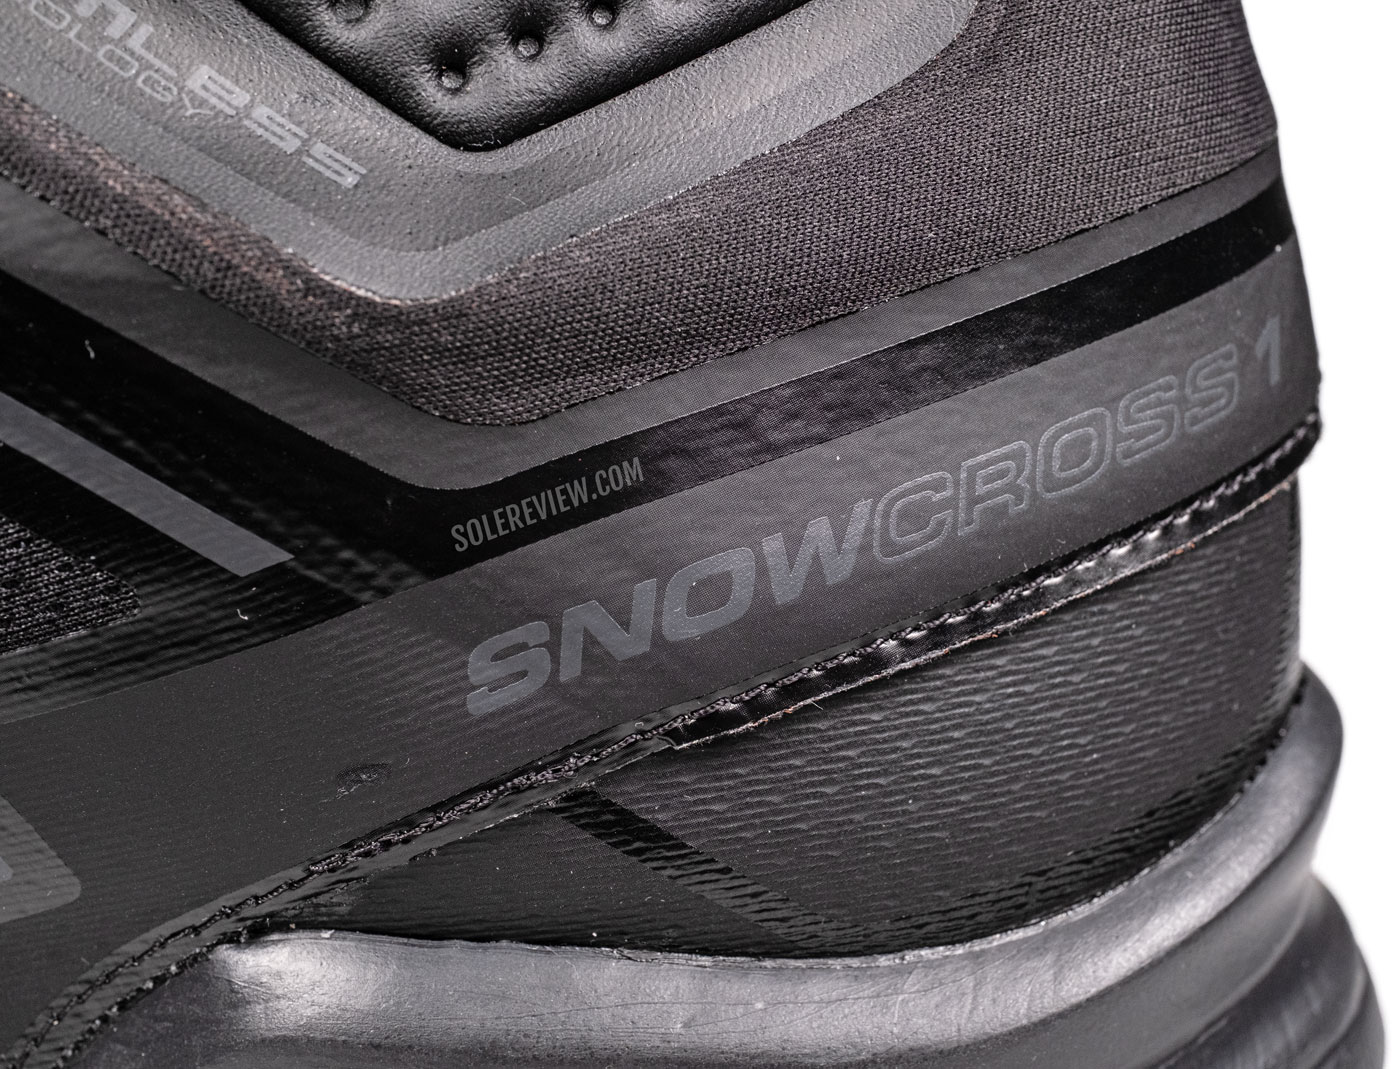 The heel counter of the Salomon Snowcross.